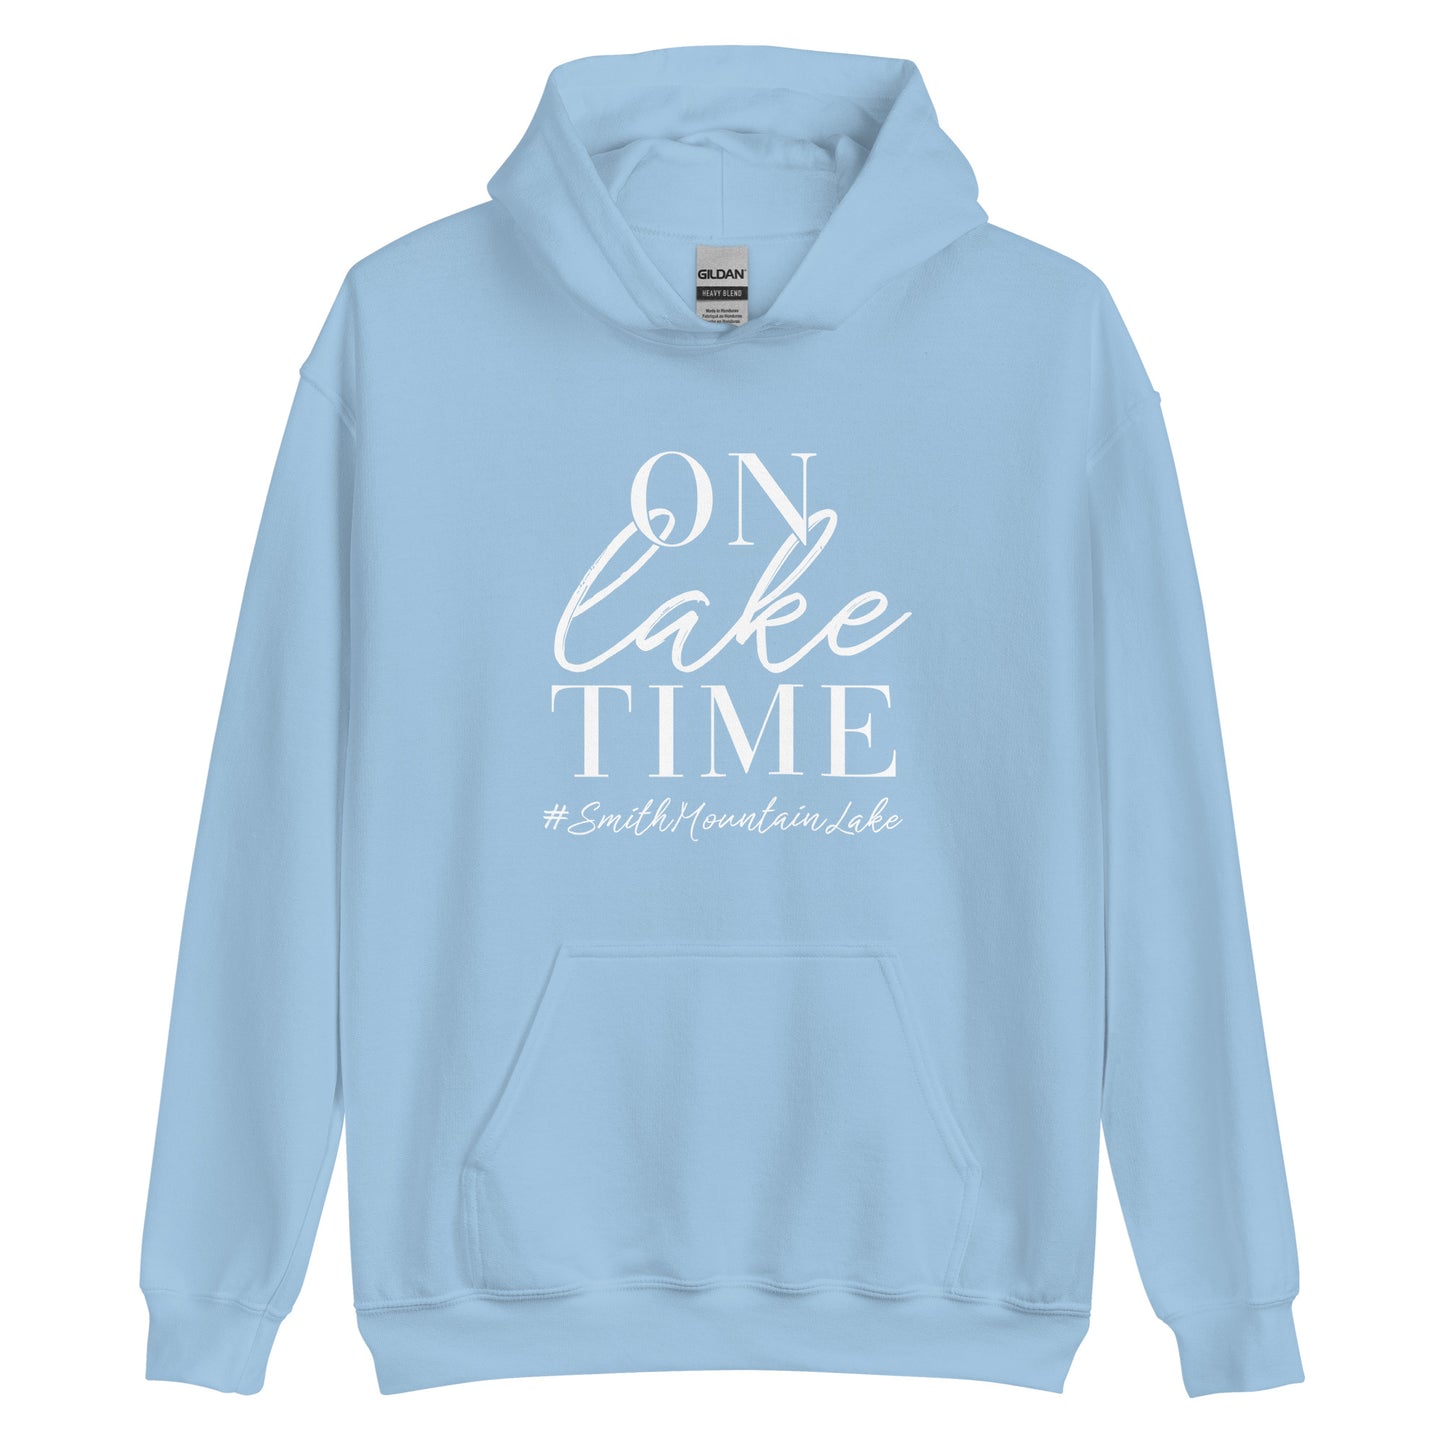 On Lake Time - Smith Mountain Lake Unisex Hoodie Sweatshirt